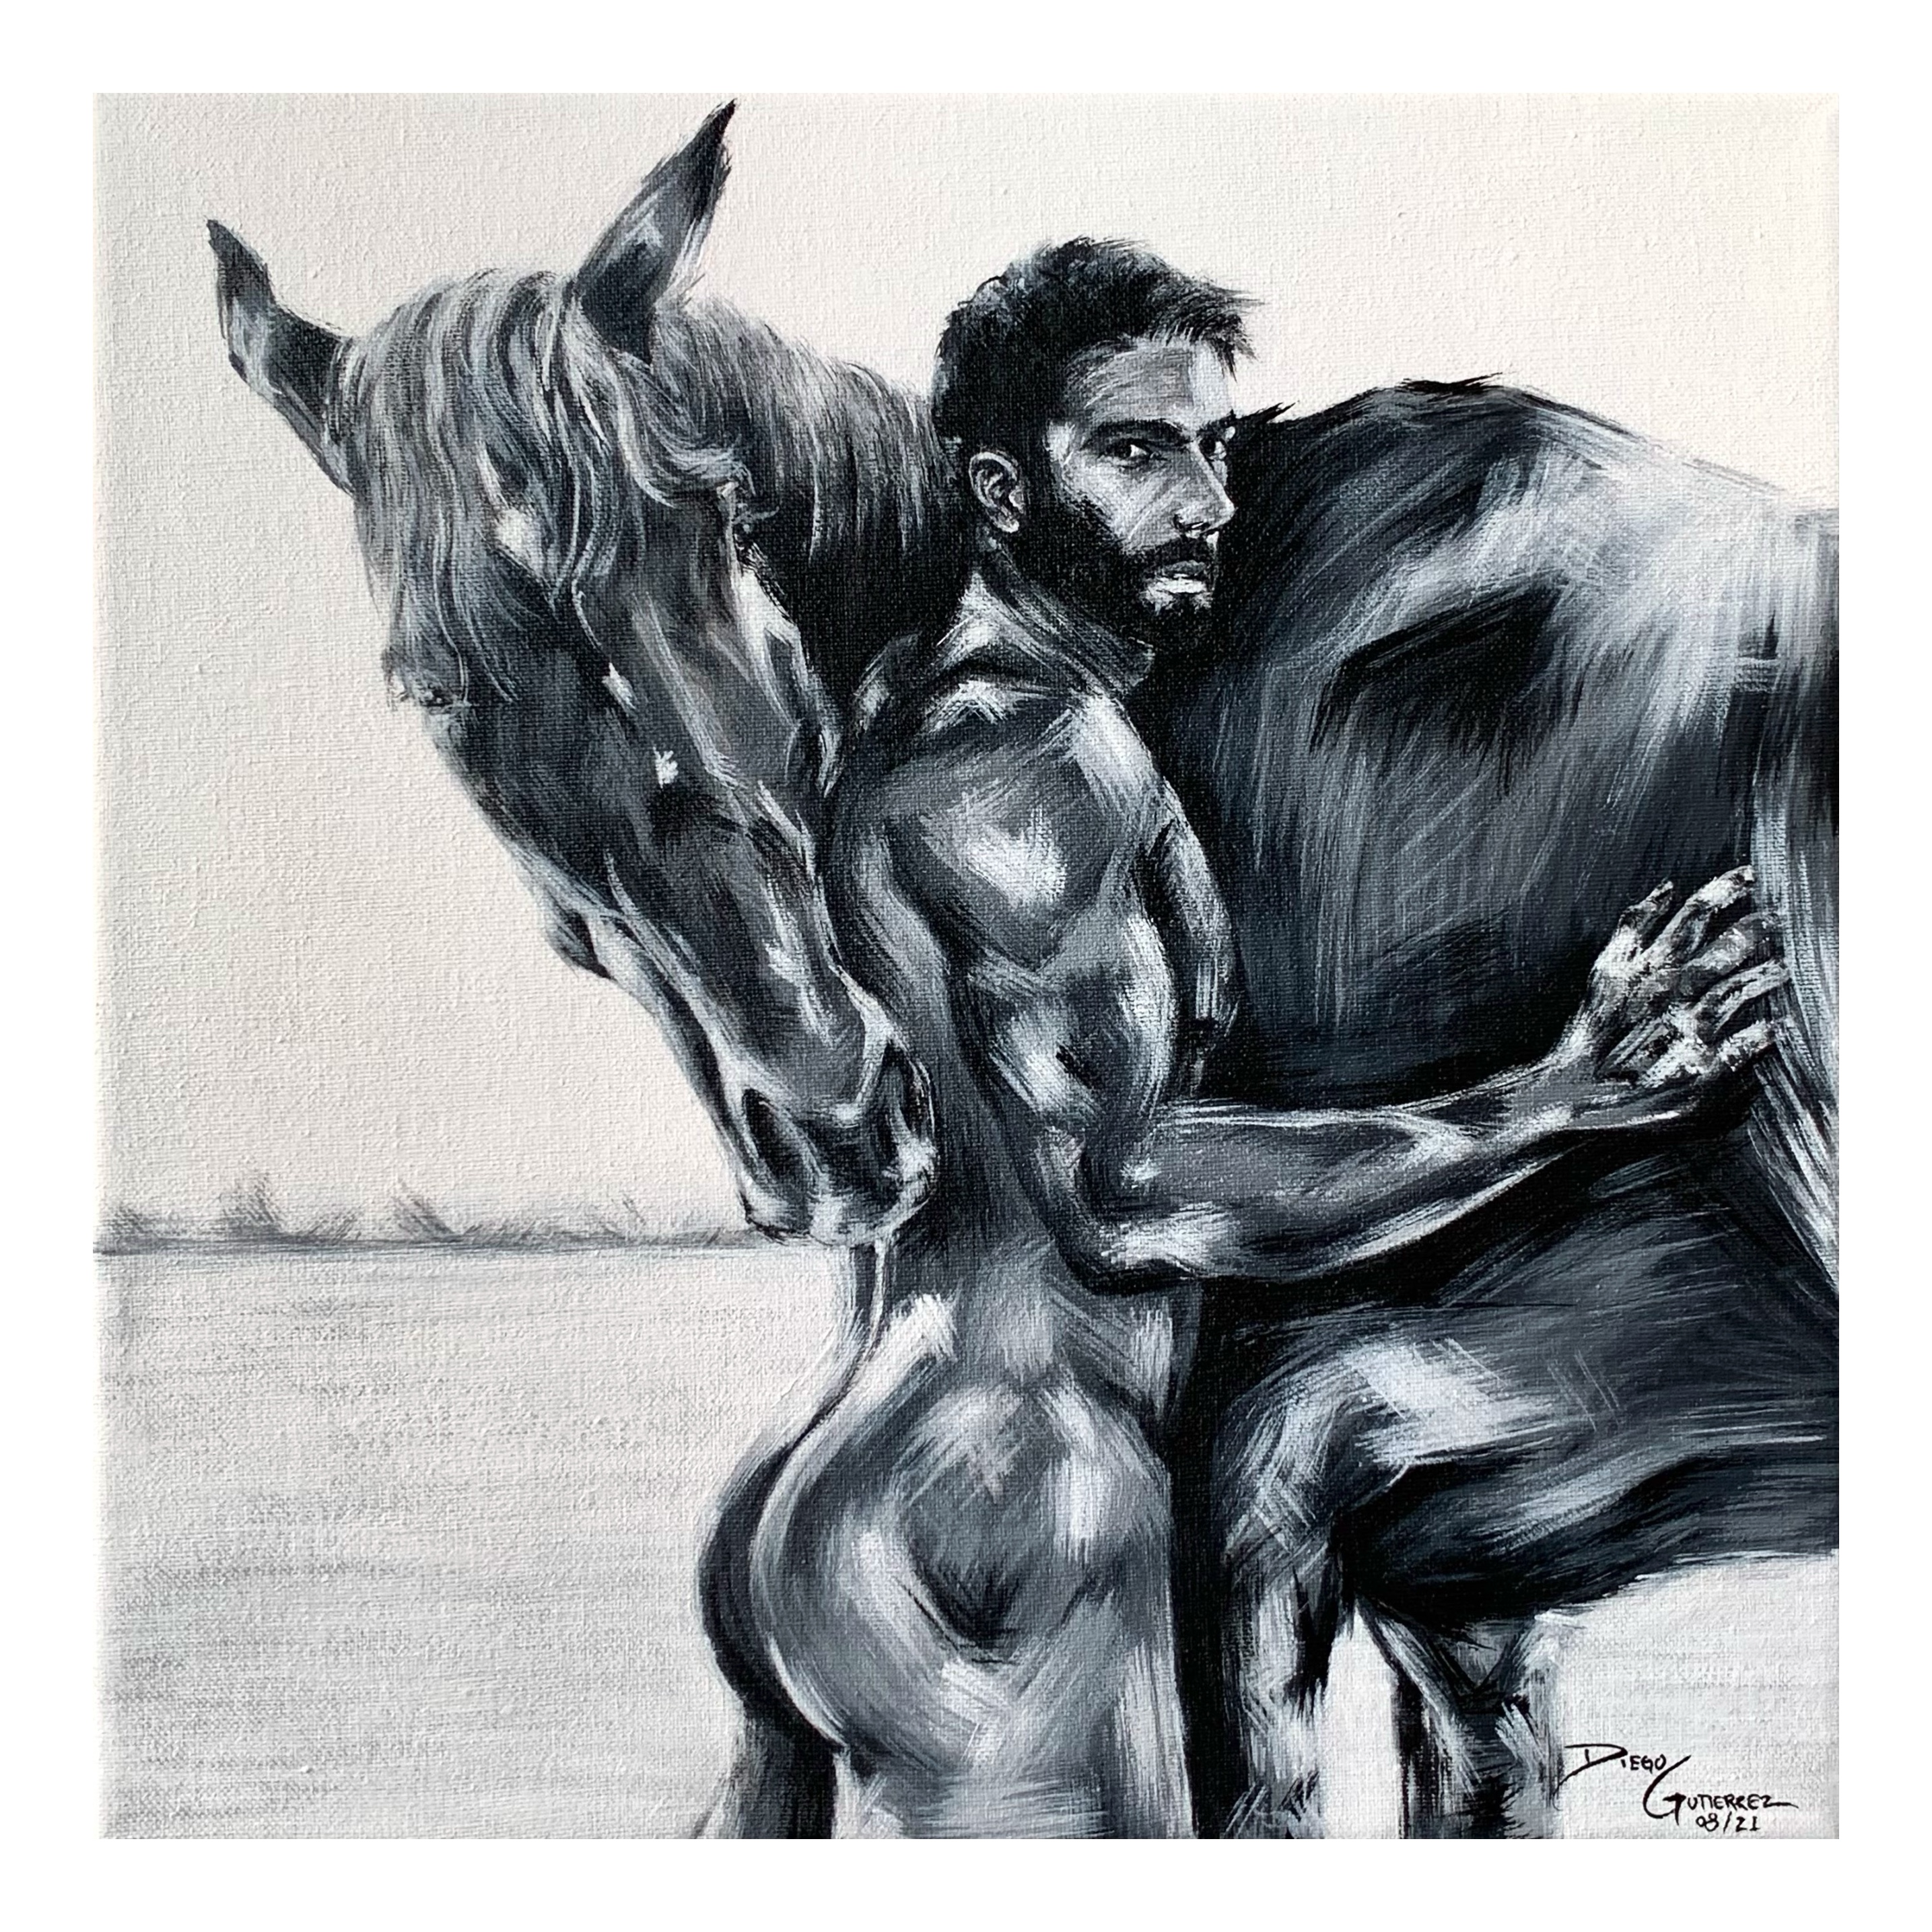 diego-gutierrez-gallery-homoerotic-Man and Horse 2-20